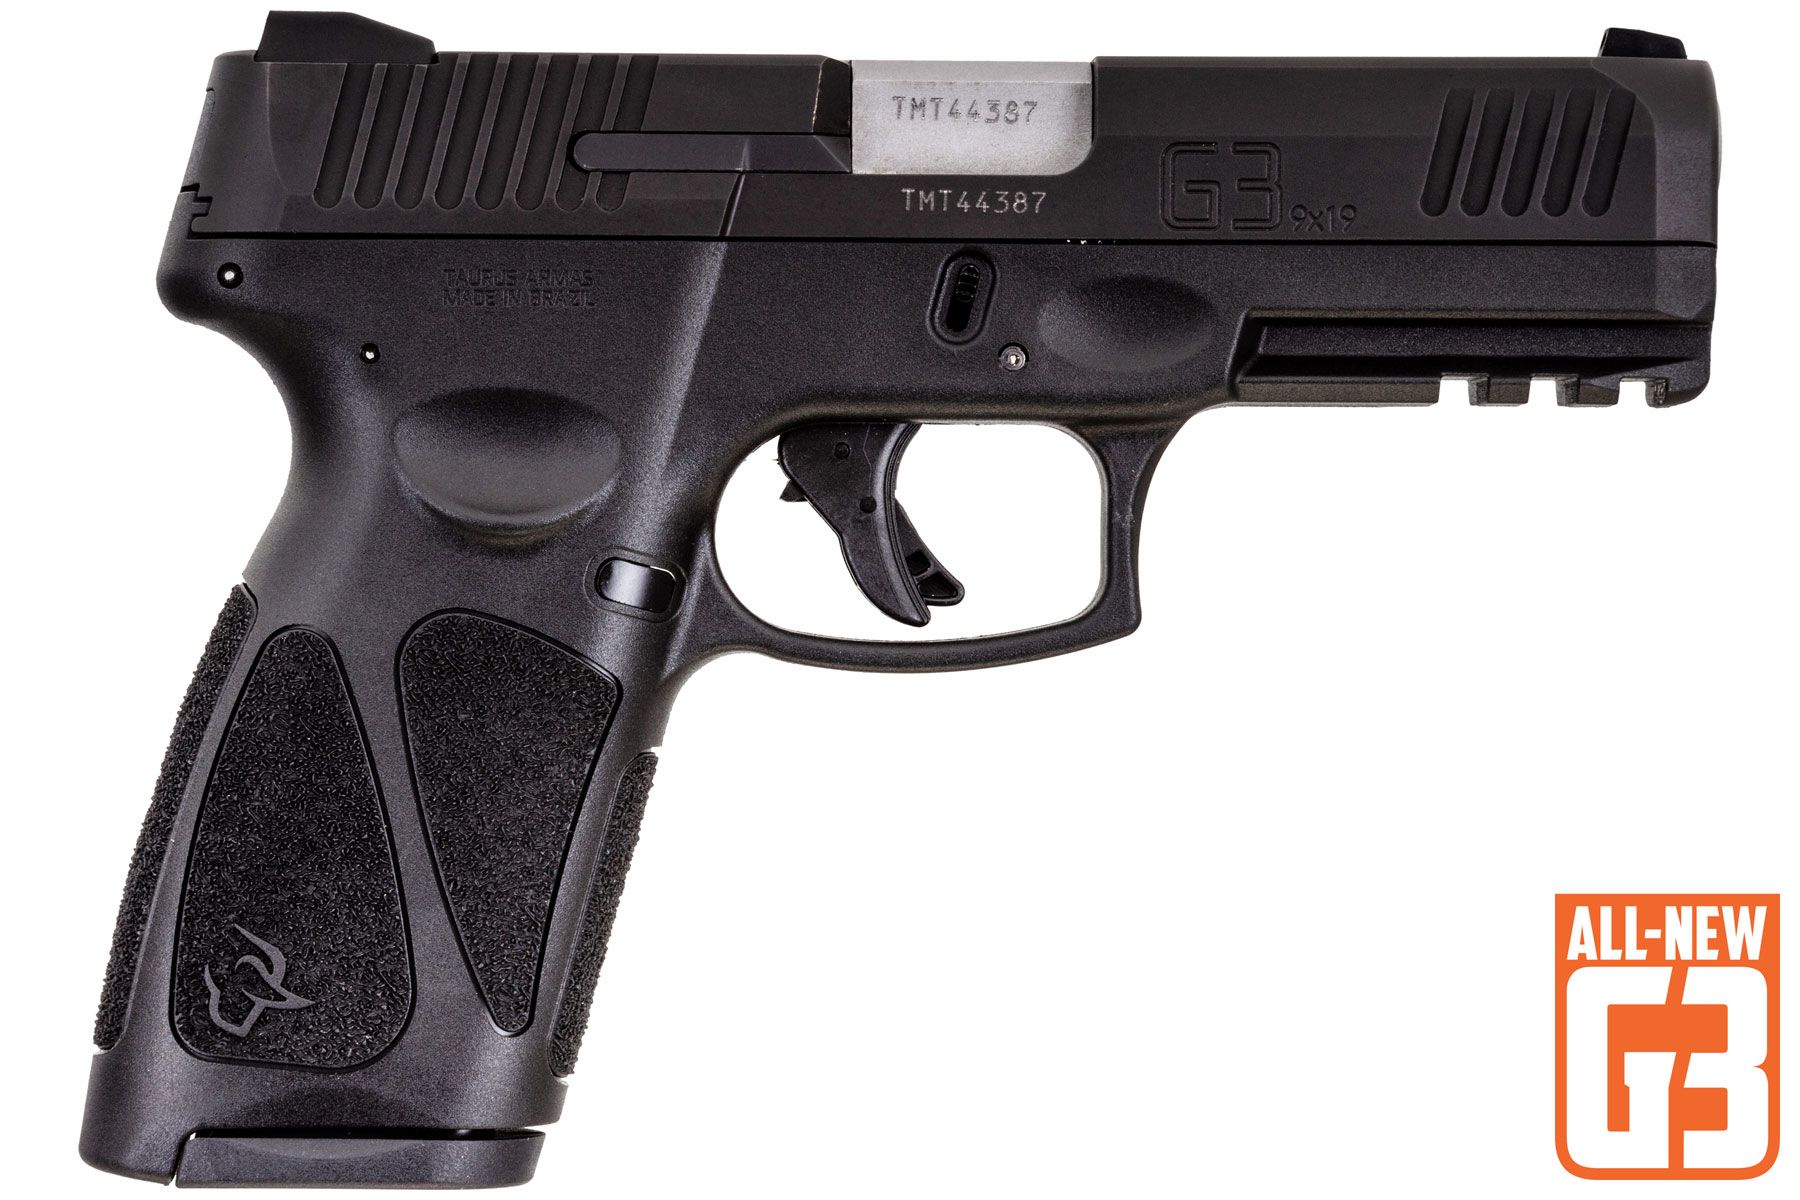 Taurus® Introduces the G3 Polymer 9mm Pistol